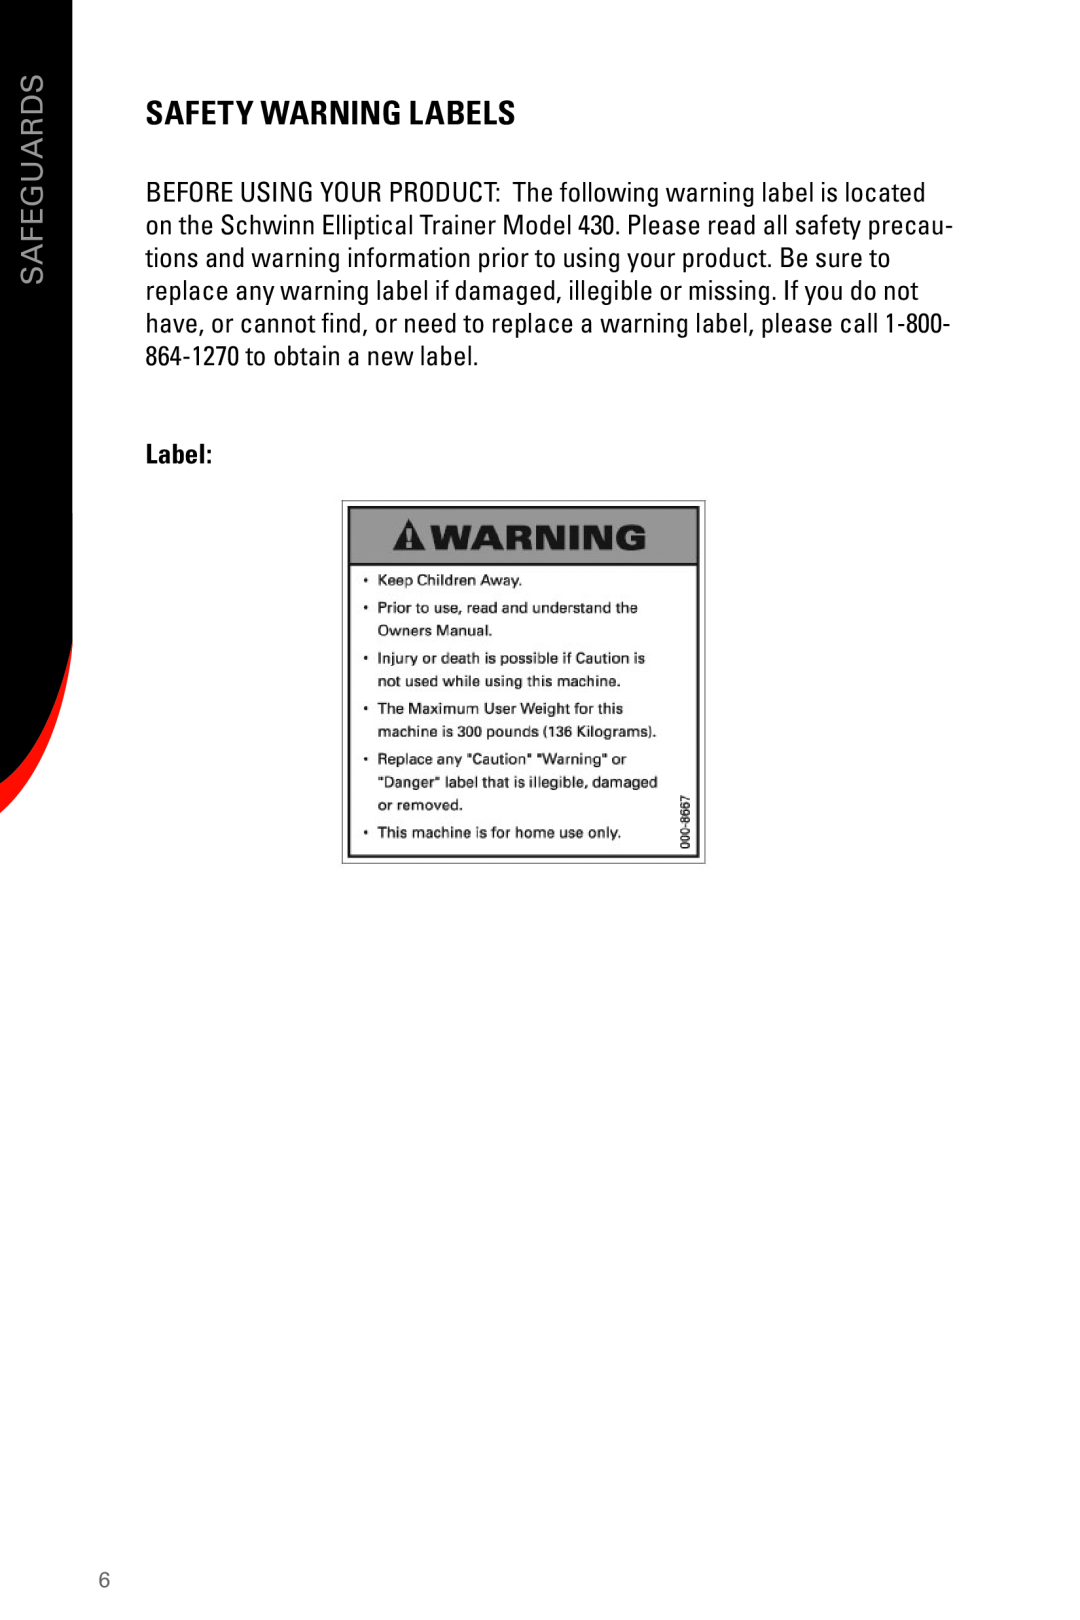 Schwinn 430 manual Safety Warning Labels, Safeguards 